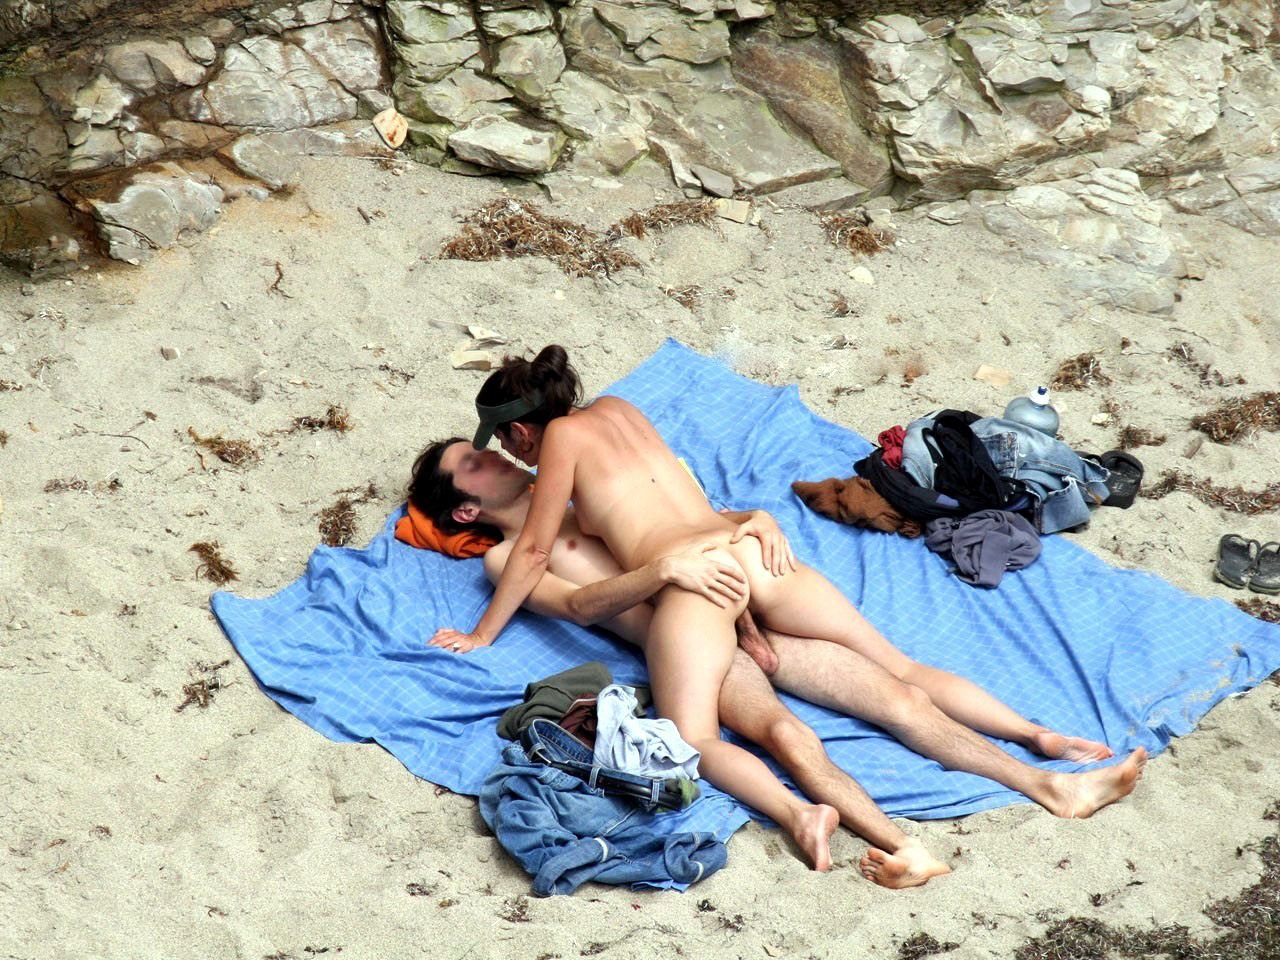 Hidden camera on the nudist beach image